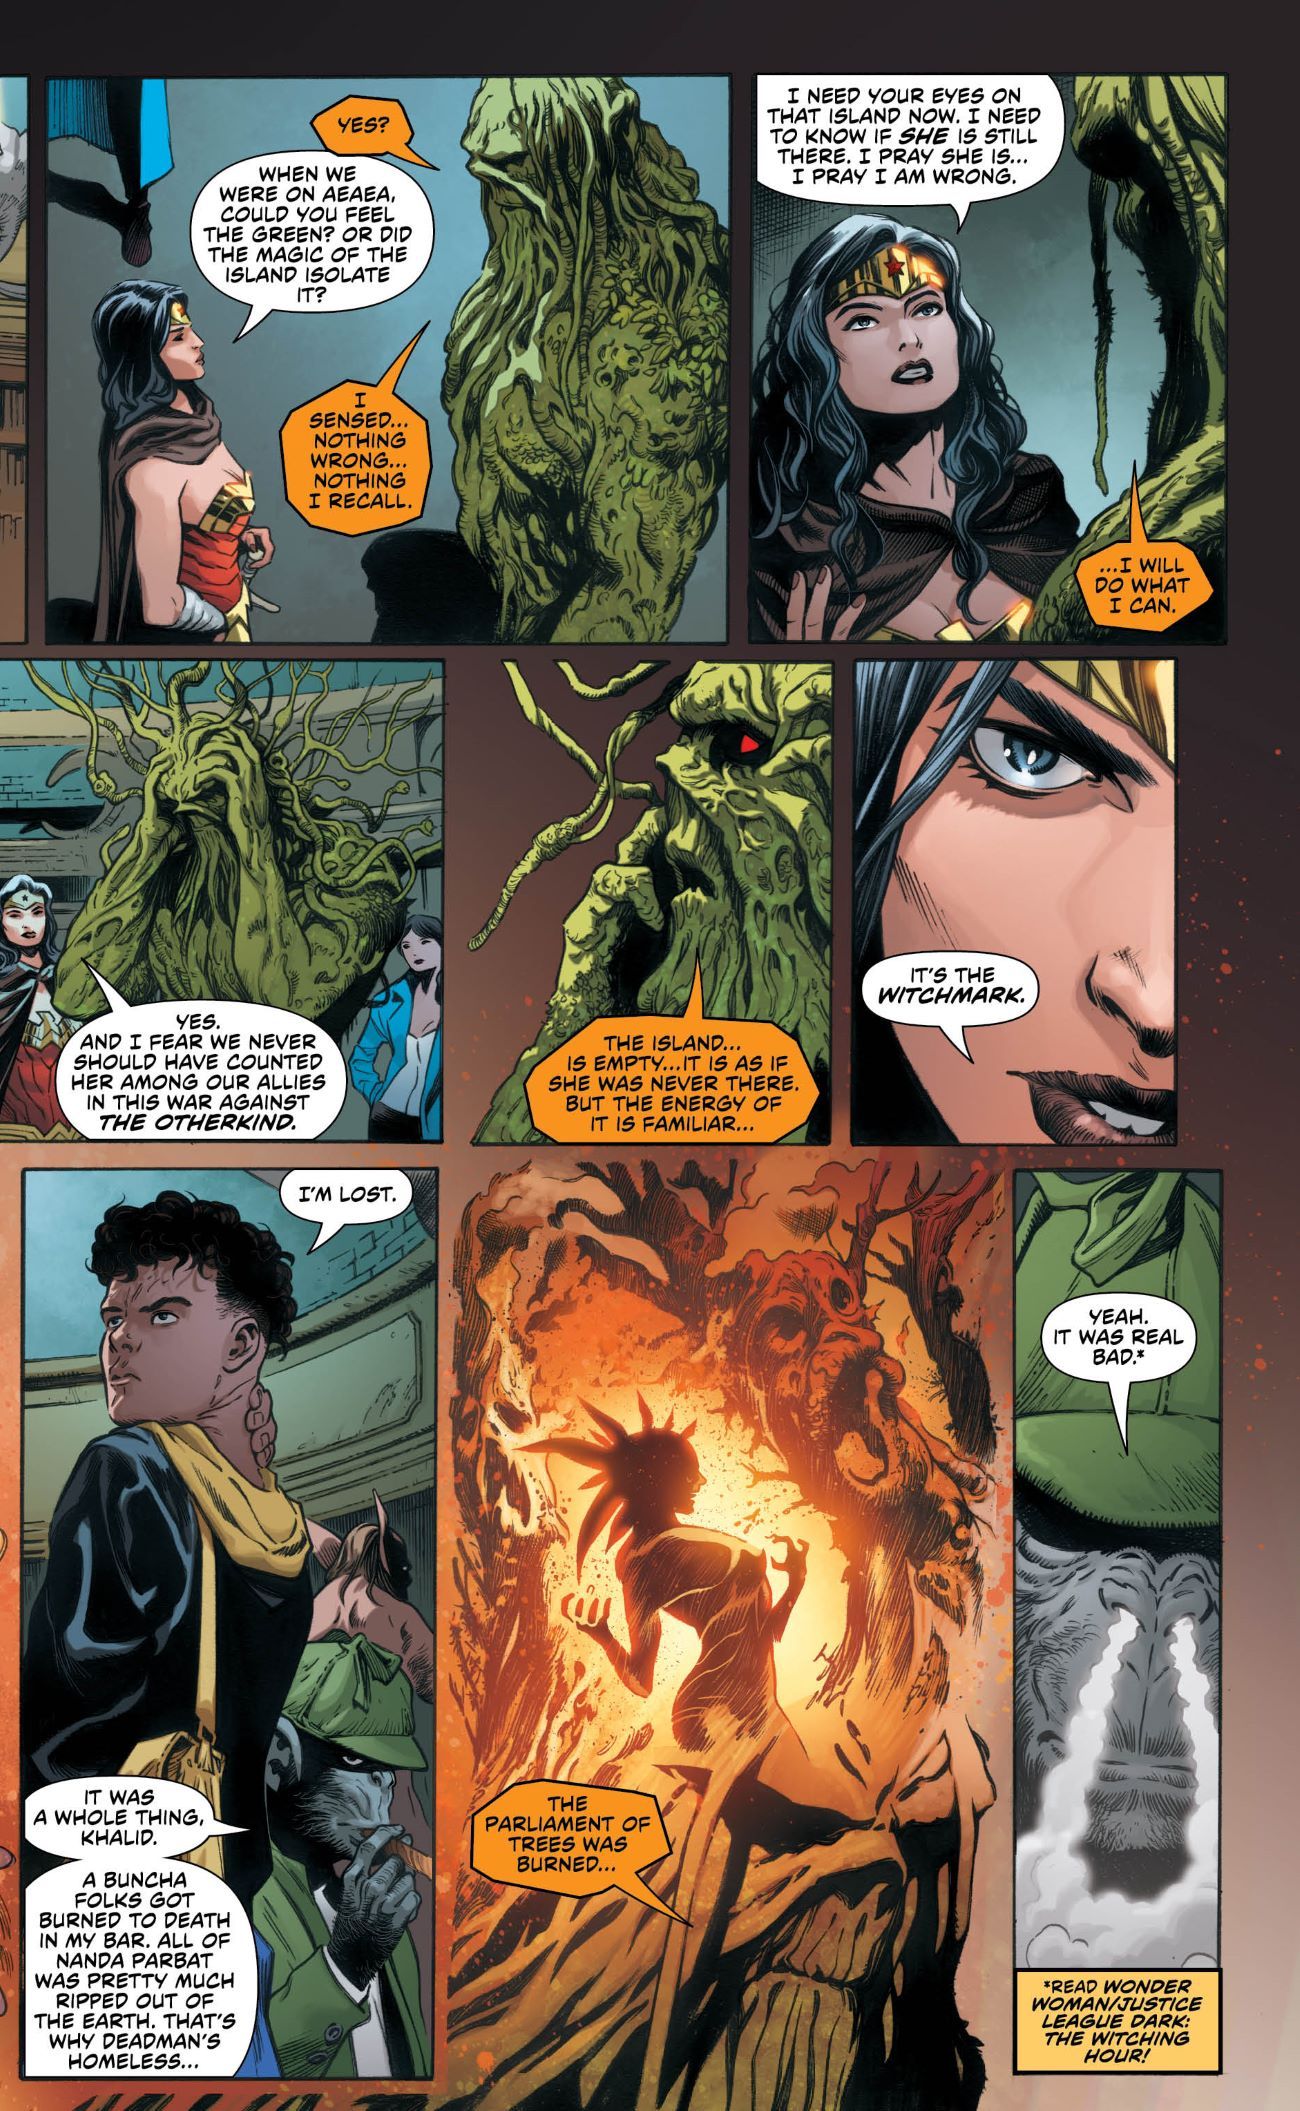 Justice League Dark 15 Comic Preview 3